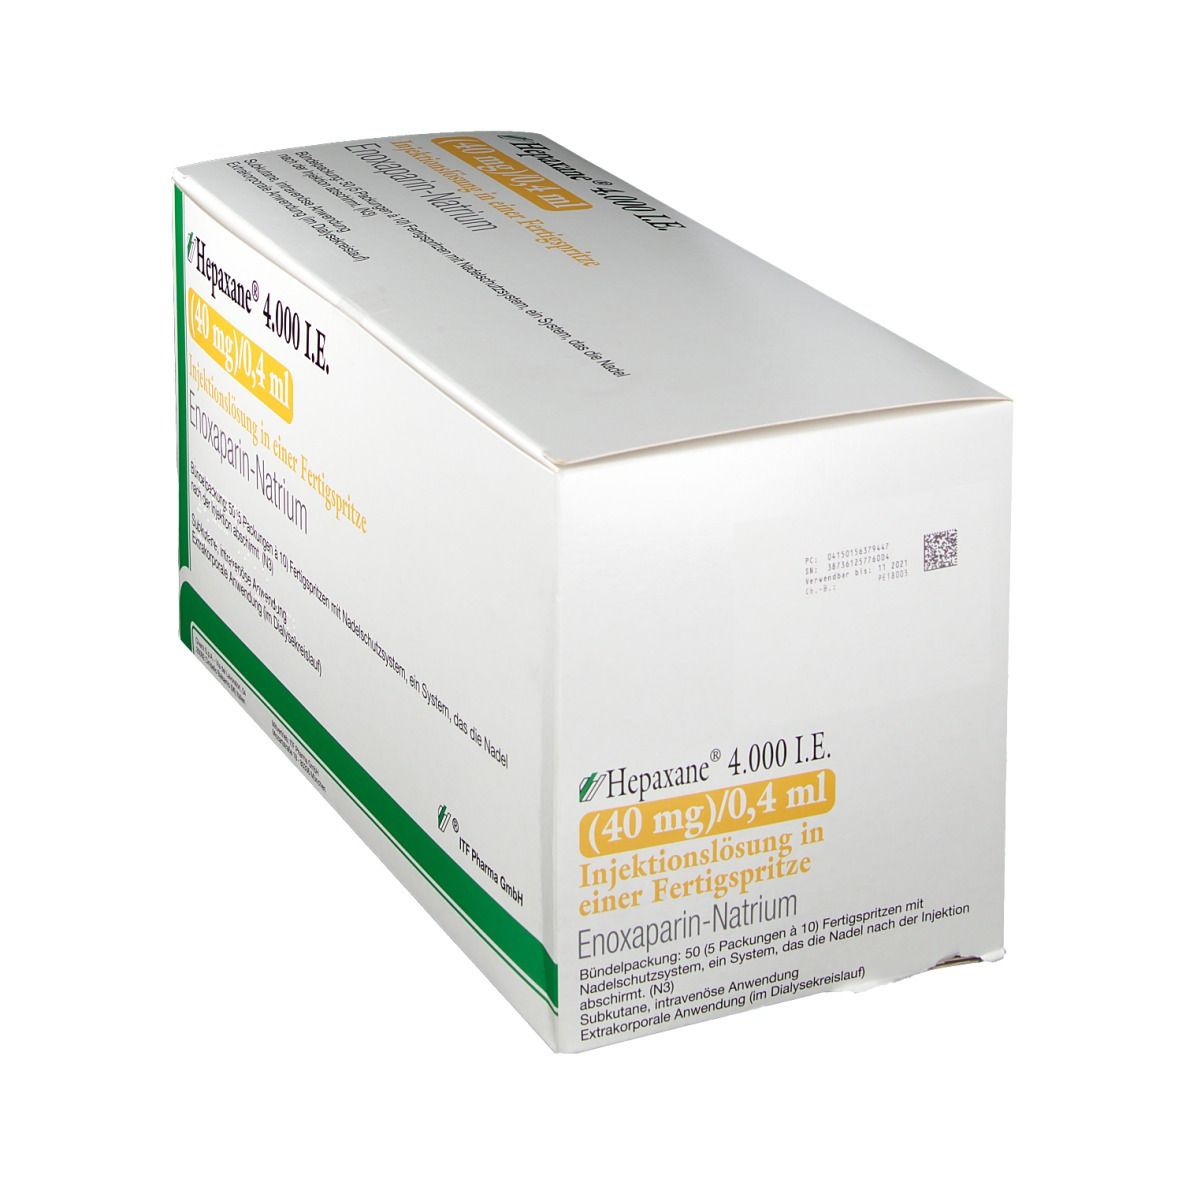 Hepaxane® 4.000 I.E. 40 mg/0,4 ml